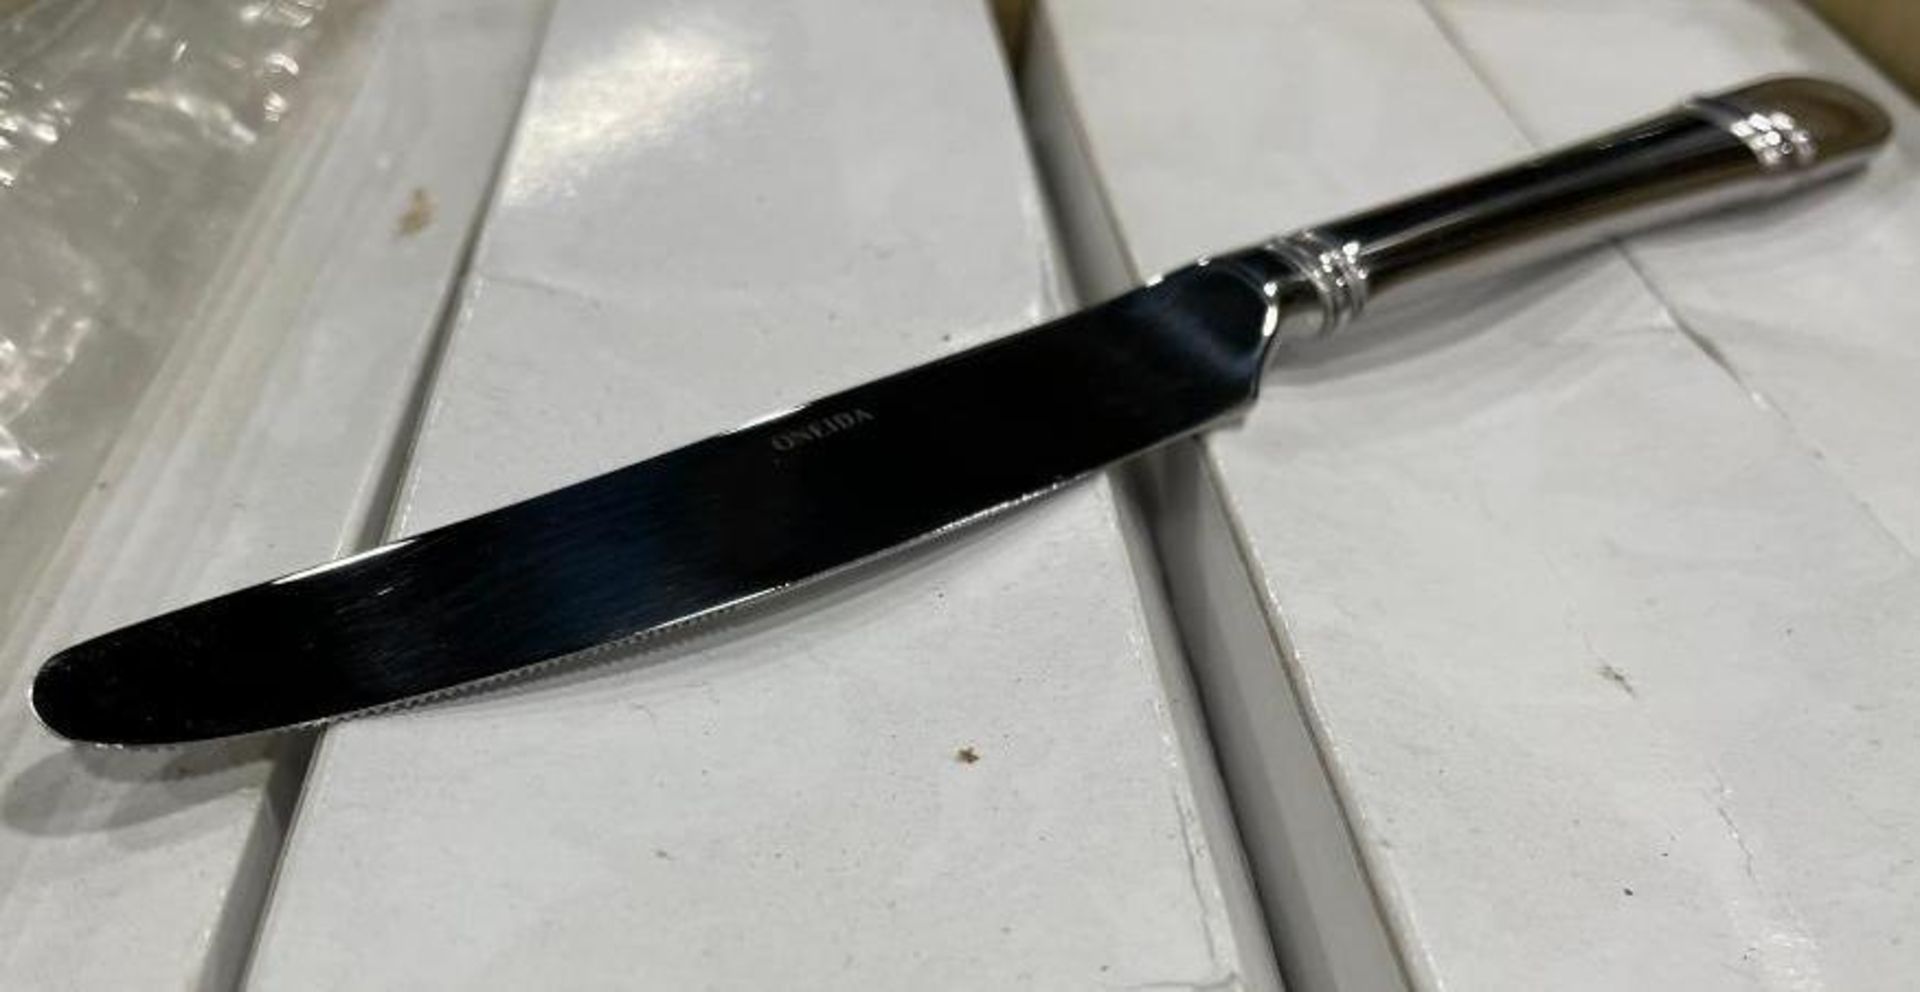 NEW (12) DOZEN OF ONEIDA T119 KPTF ASTRAGAL TABLE KNIFE, 18/10 STAINLESS STEEL - 9-3/8" - Image 3 of 3